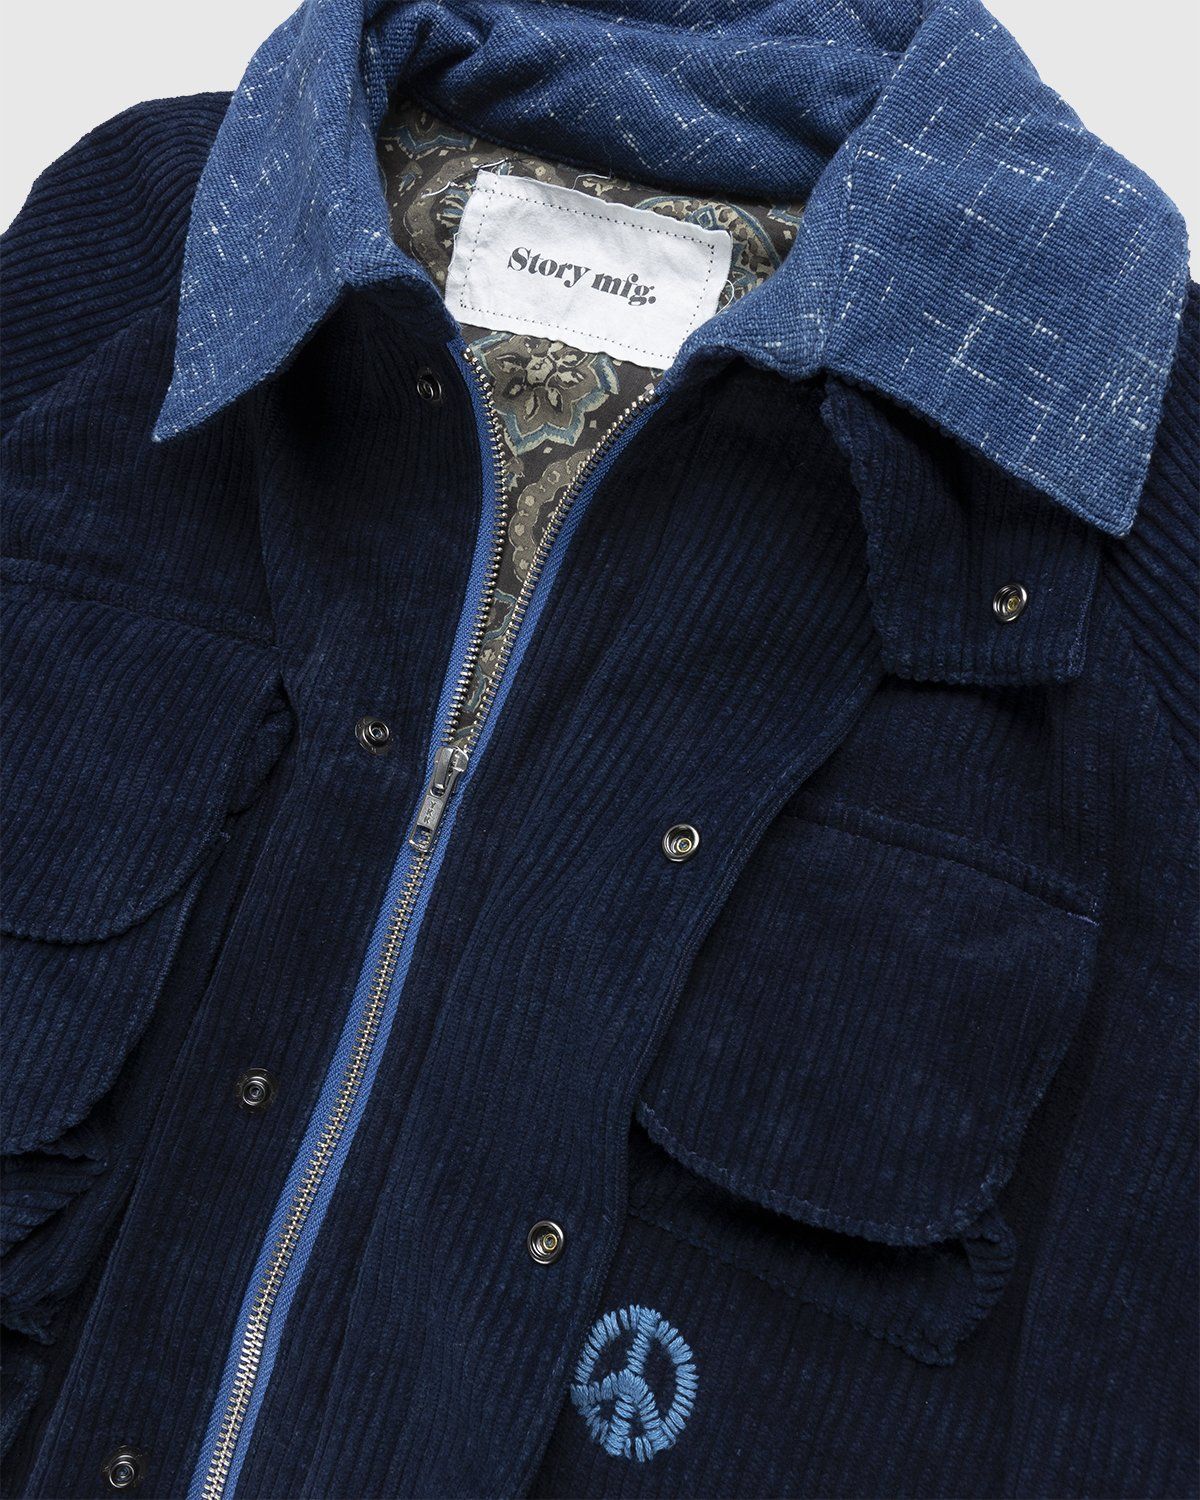 Story mfg. – Rambler Jacket Deep Indigo Corduroy - Outerwear - Blue - Image 3